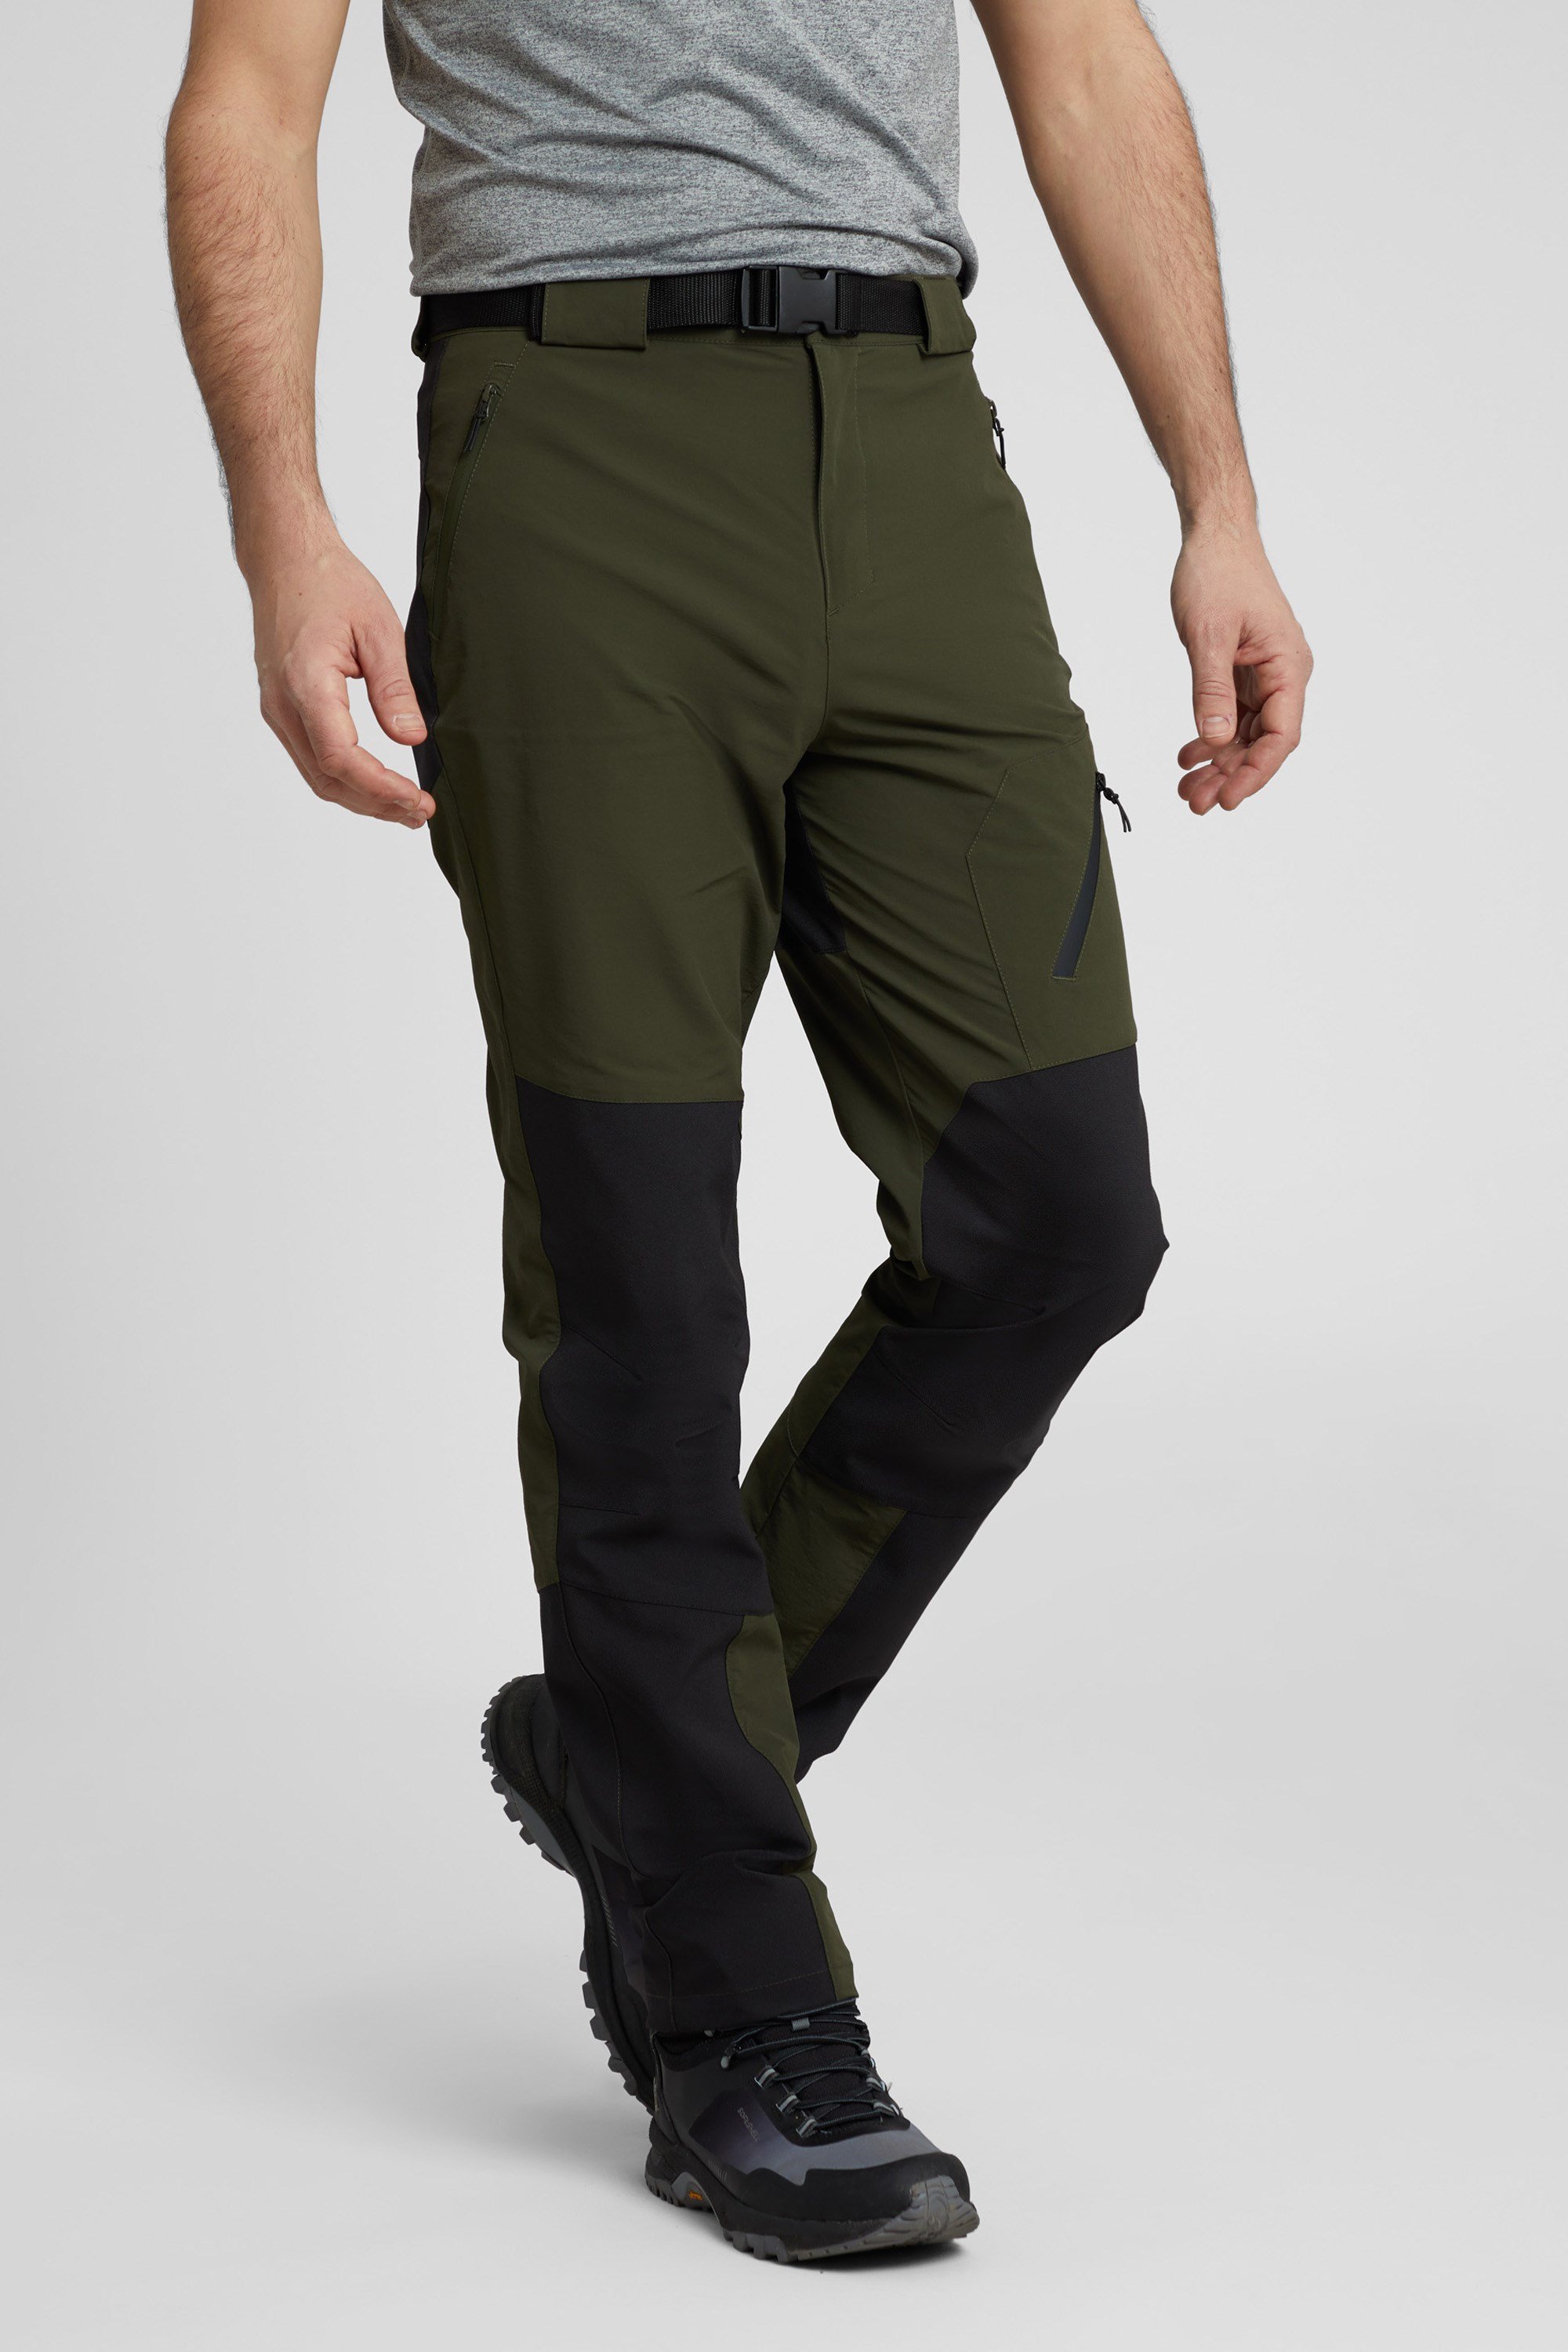 Mountain Warehouse Outdoor Pantaloni Da Uomo-Heavy Duty Resistente Ri-rinforzato le ginocchia 